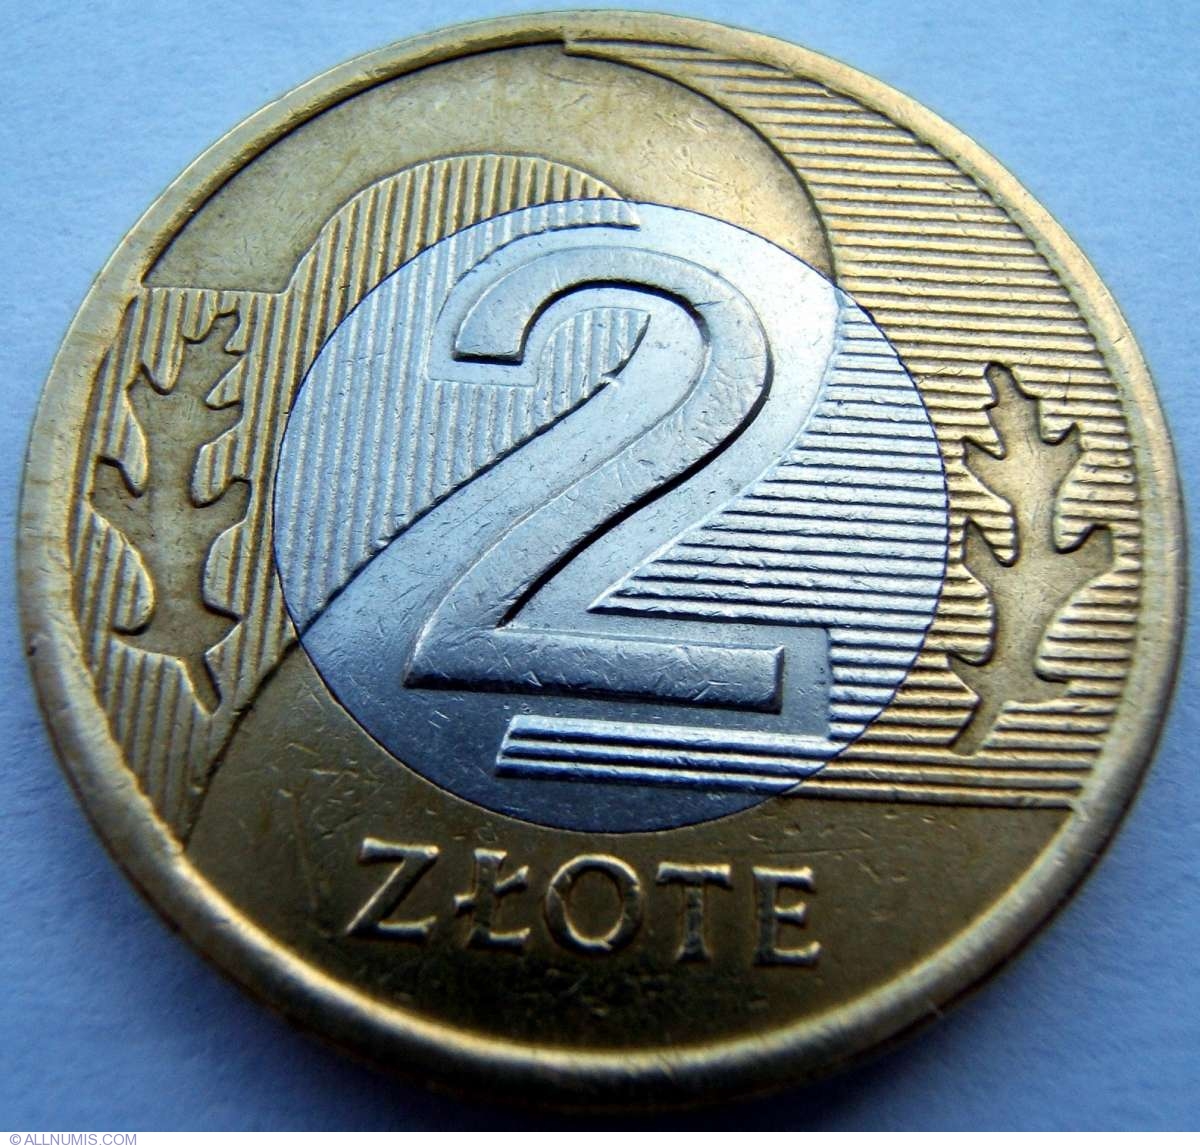 2 Zlote 1995 1994 2017 Issue 2 Z ote Poland Coin 589